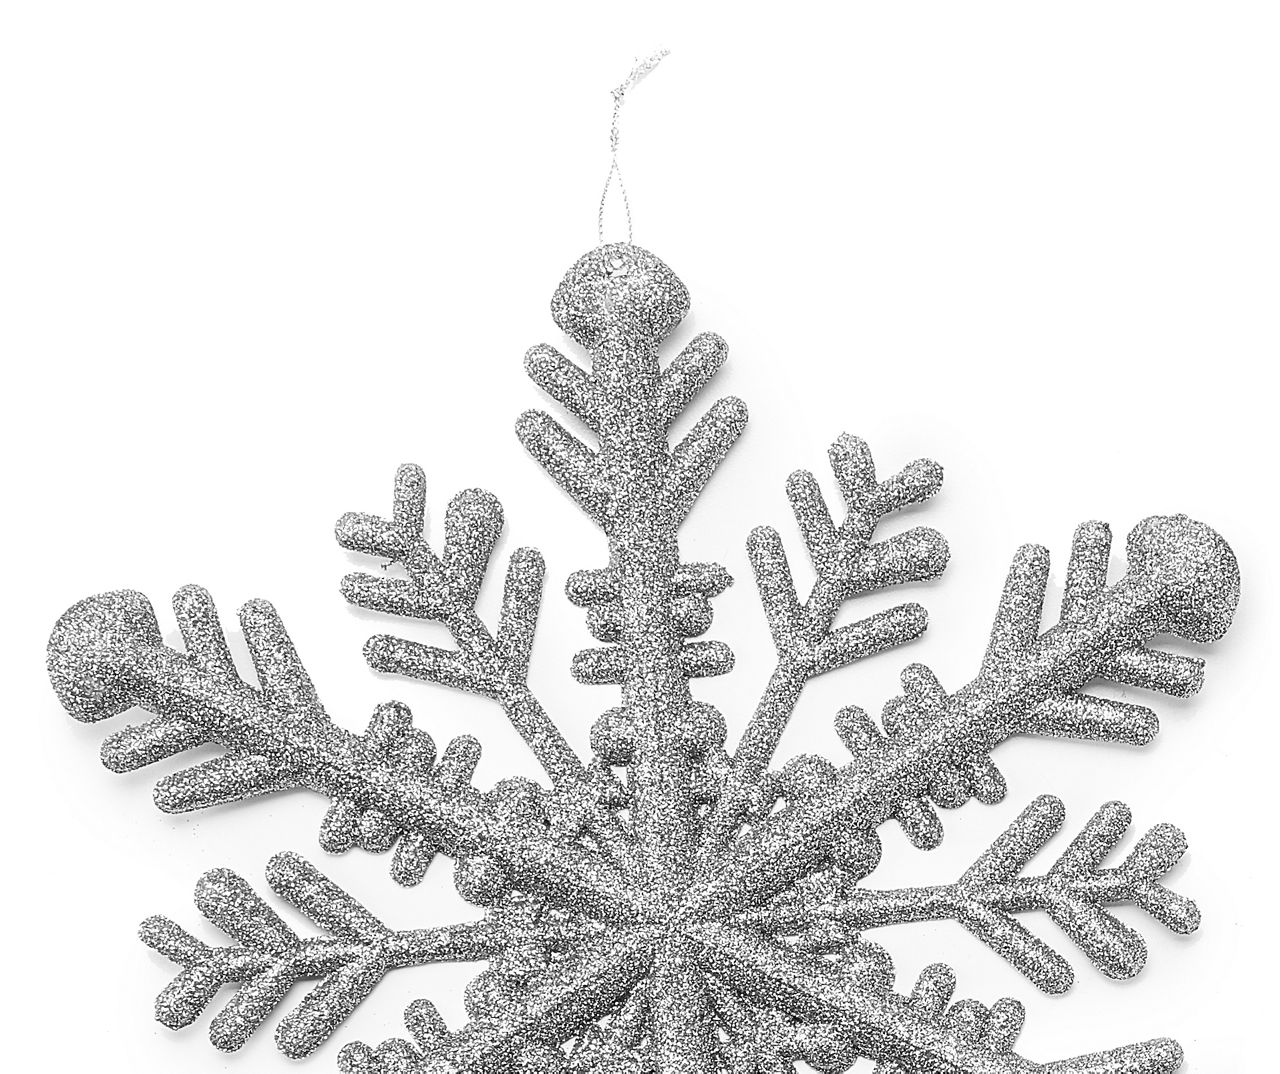 Winter Wonder Lane Silver Glitter Snowflakes, 2-Pack